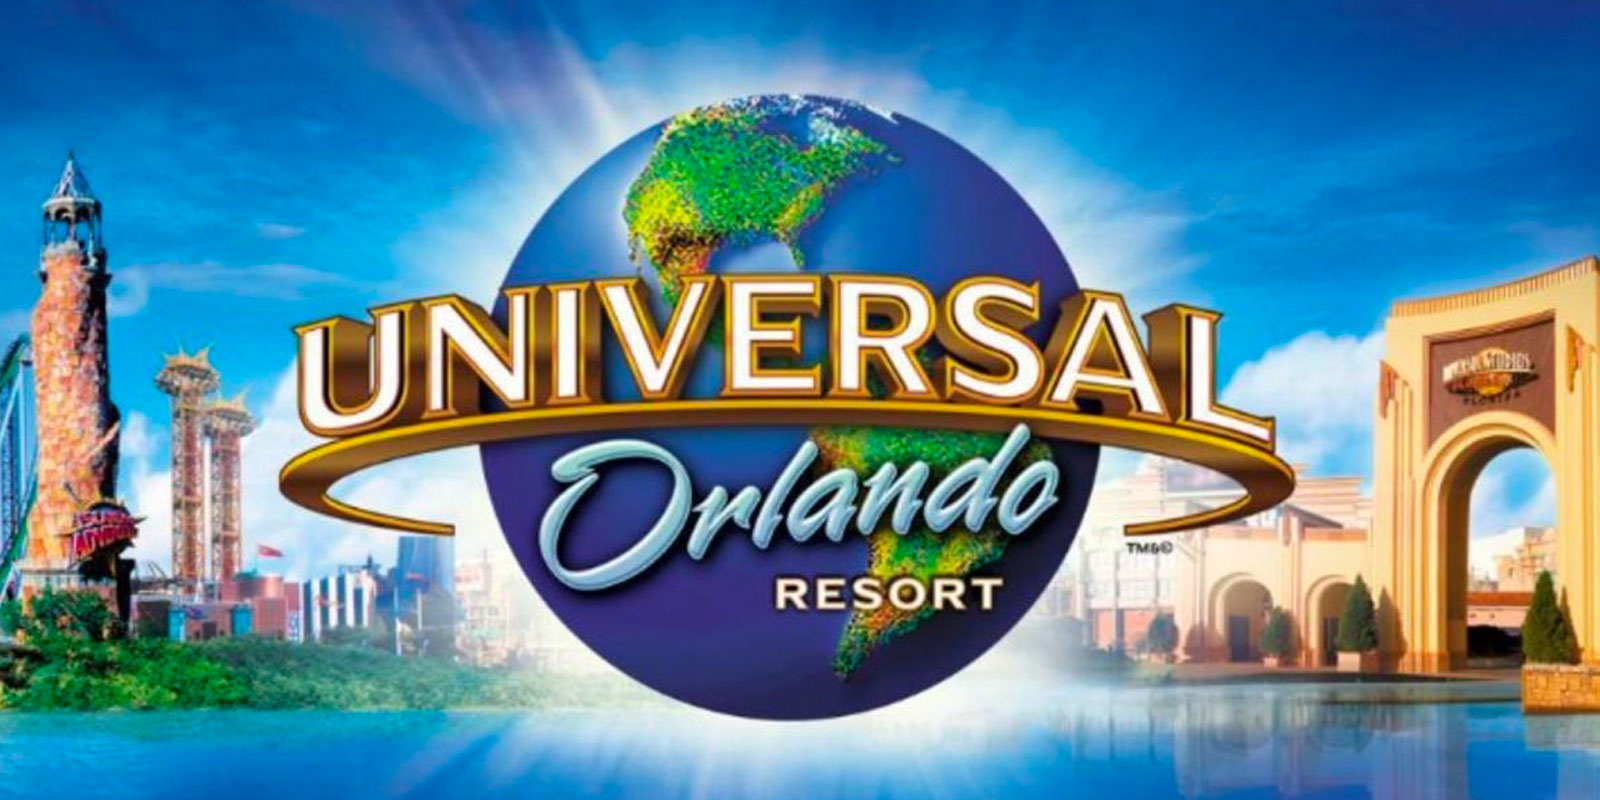 Universal Studios Orlando - Visit Orlando, FL | My Heathrow Florida